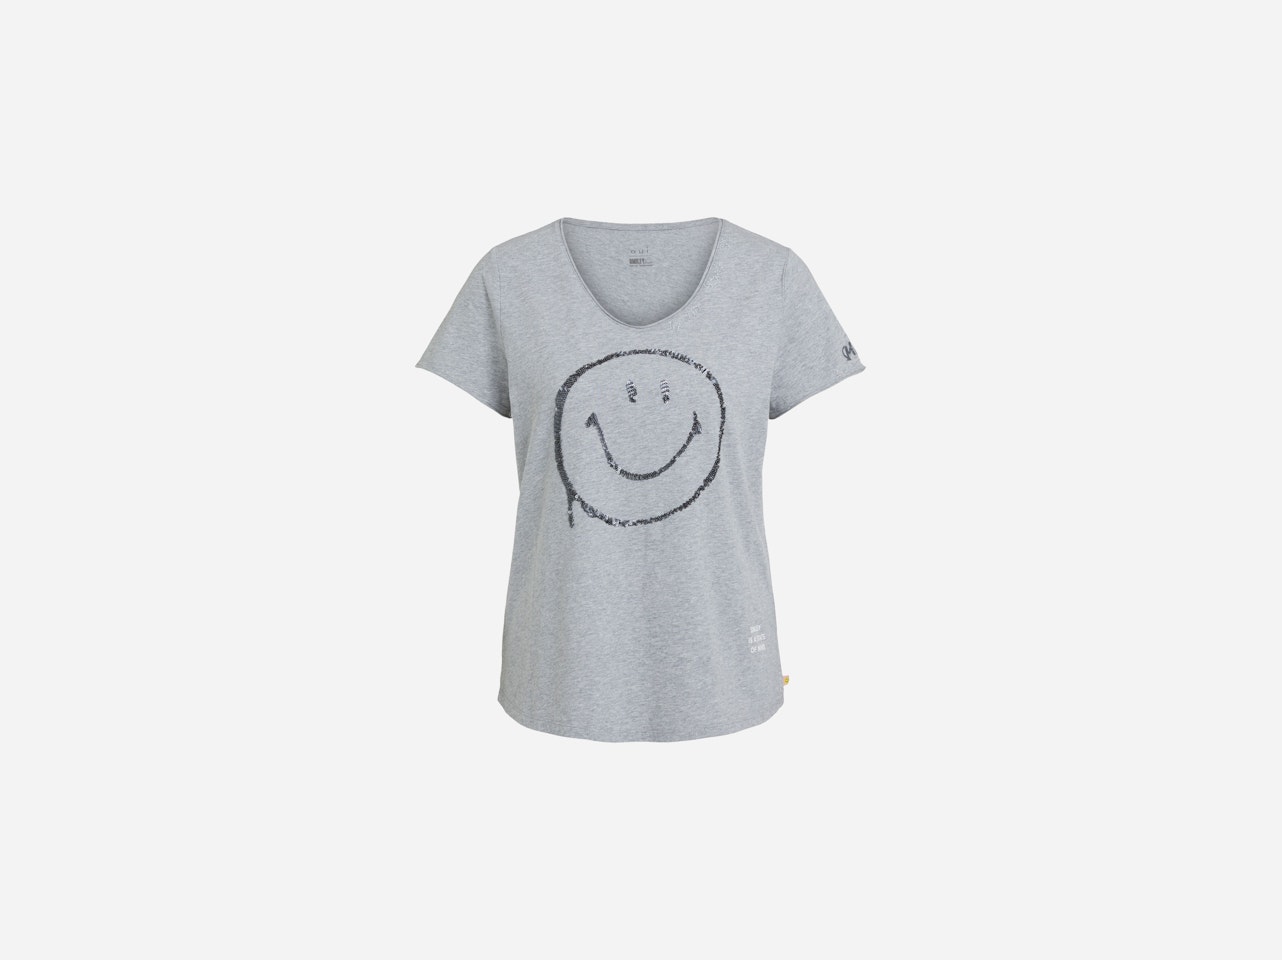 Bild 7 von T-shirt oui x Smiley® with sequins in light grey | Oui